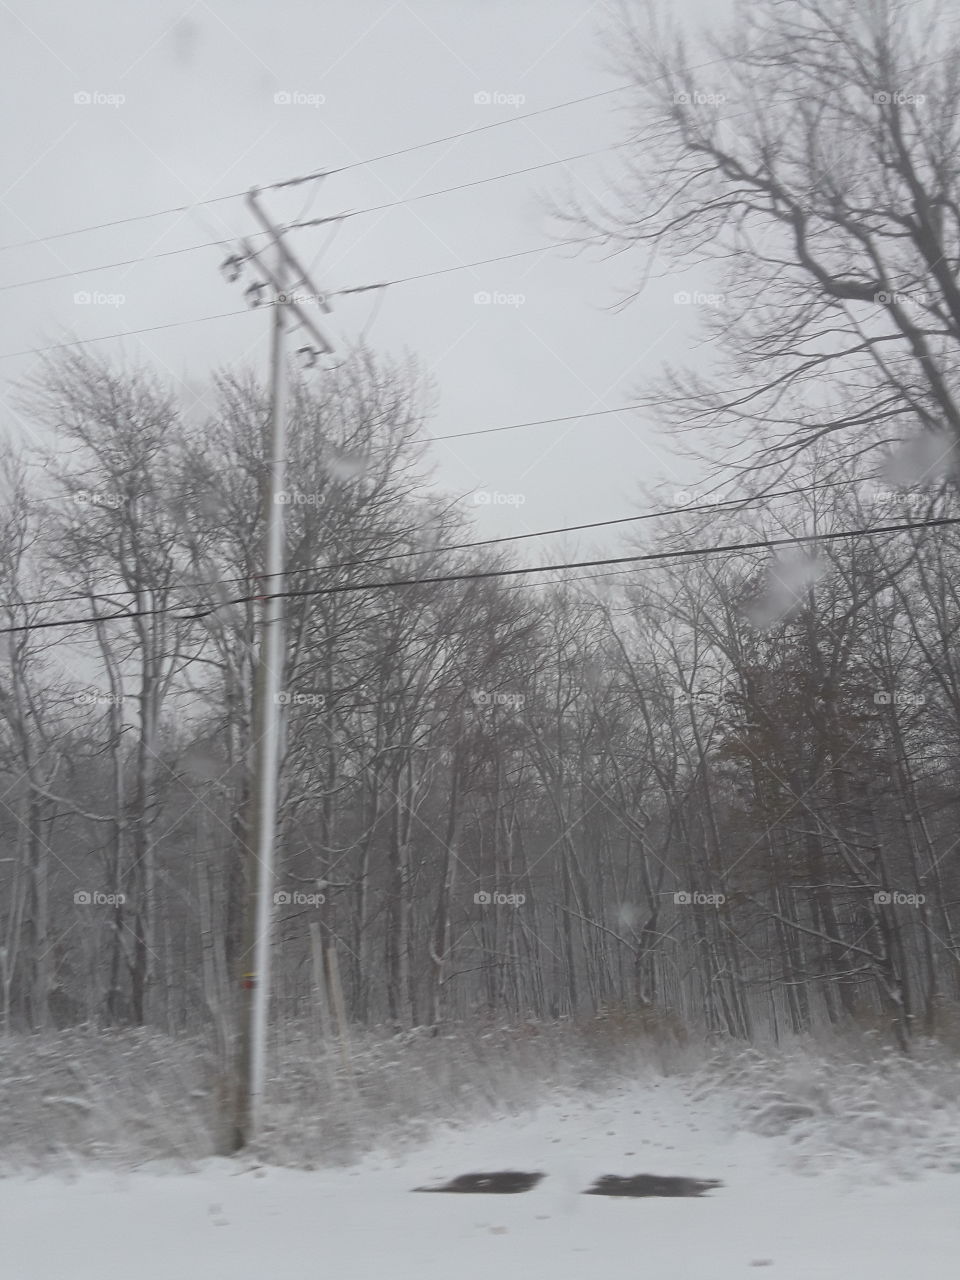 snowy telephone pole